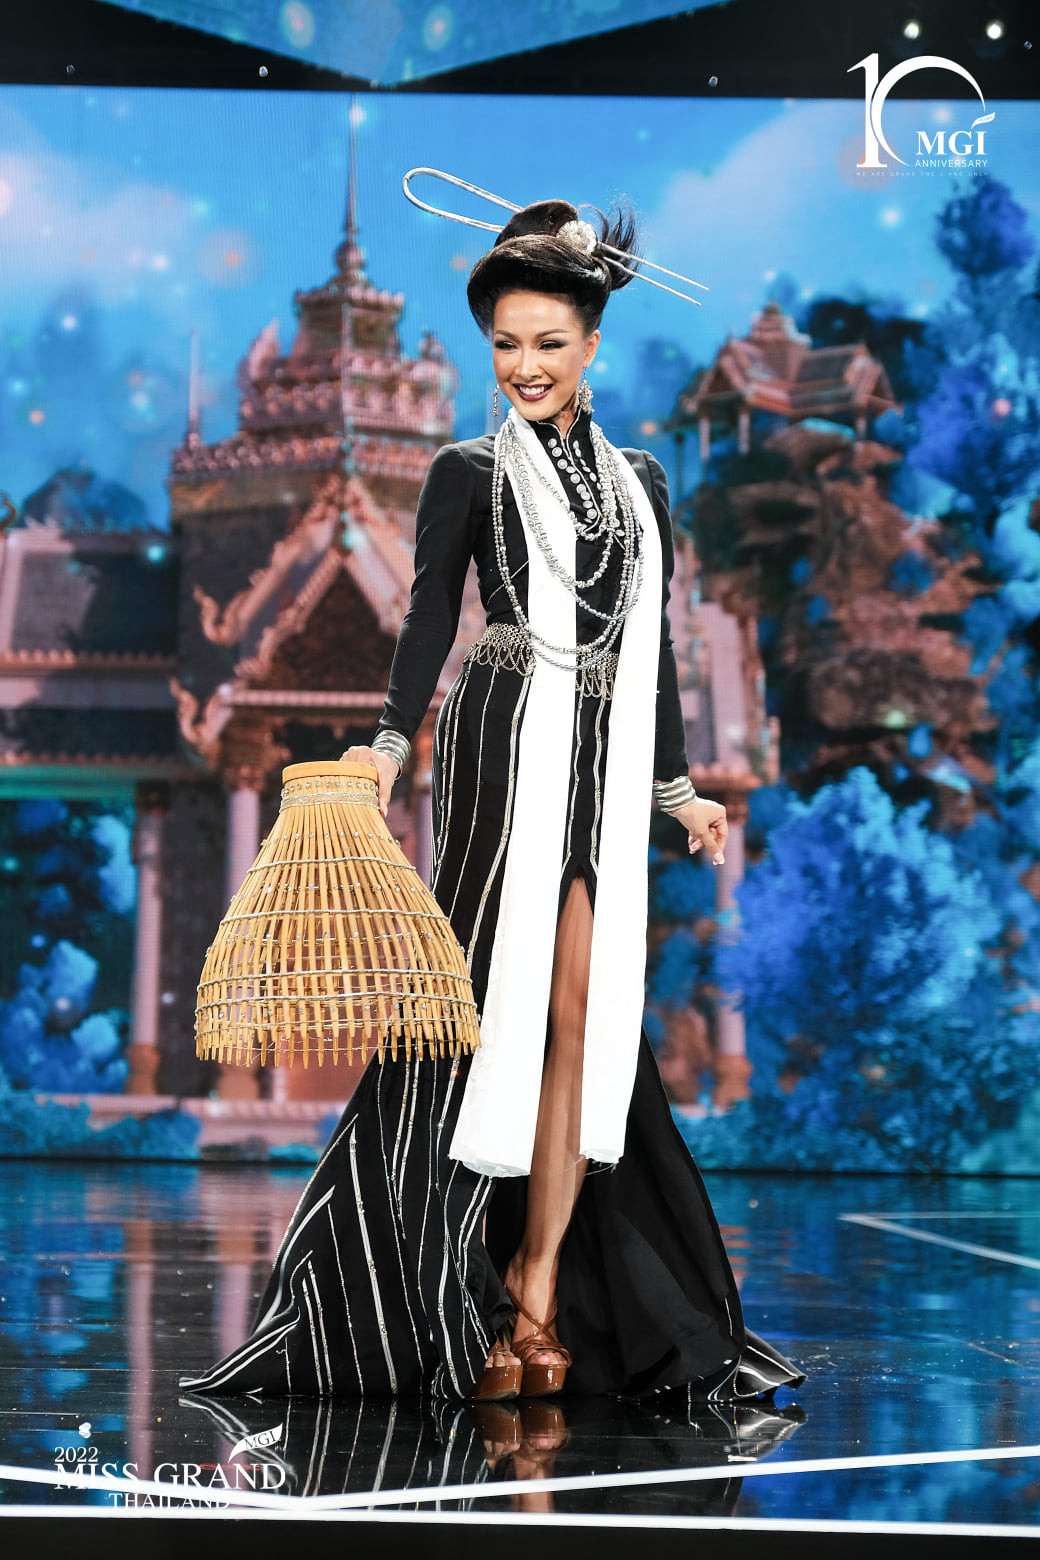 trajes tipicos de candidatas a miss grand thailand 2022. - Página 3 VtzviG